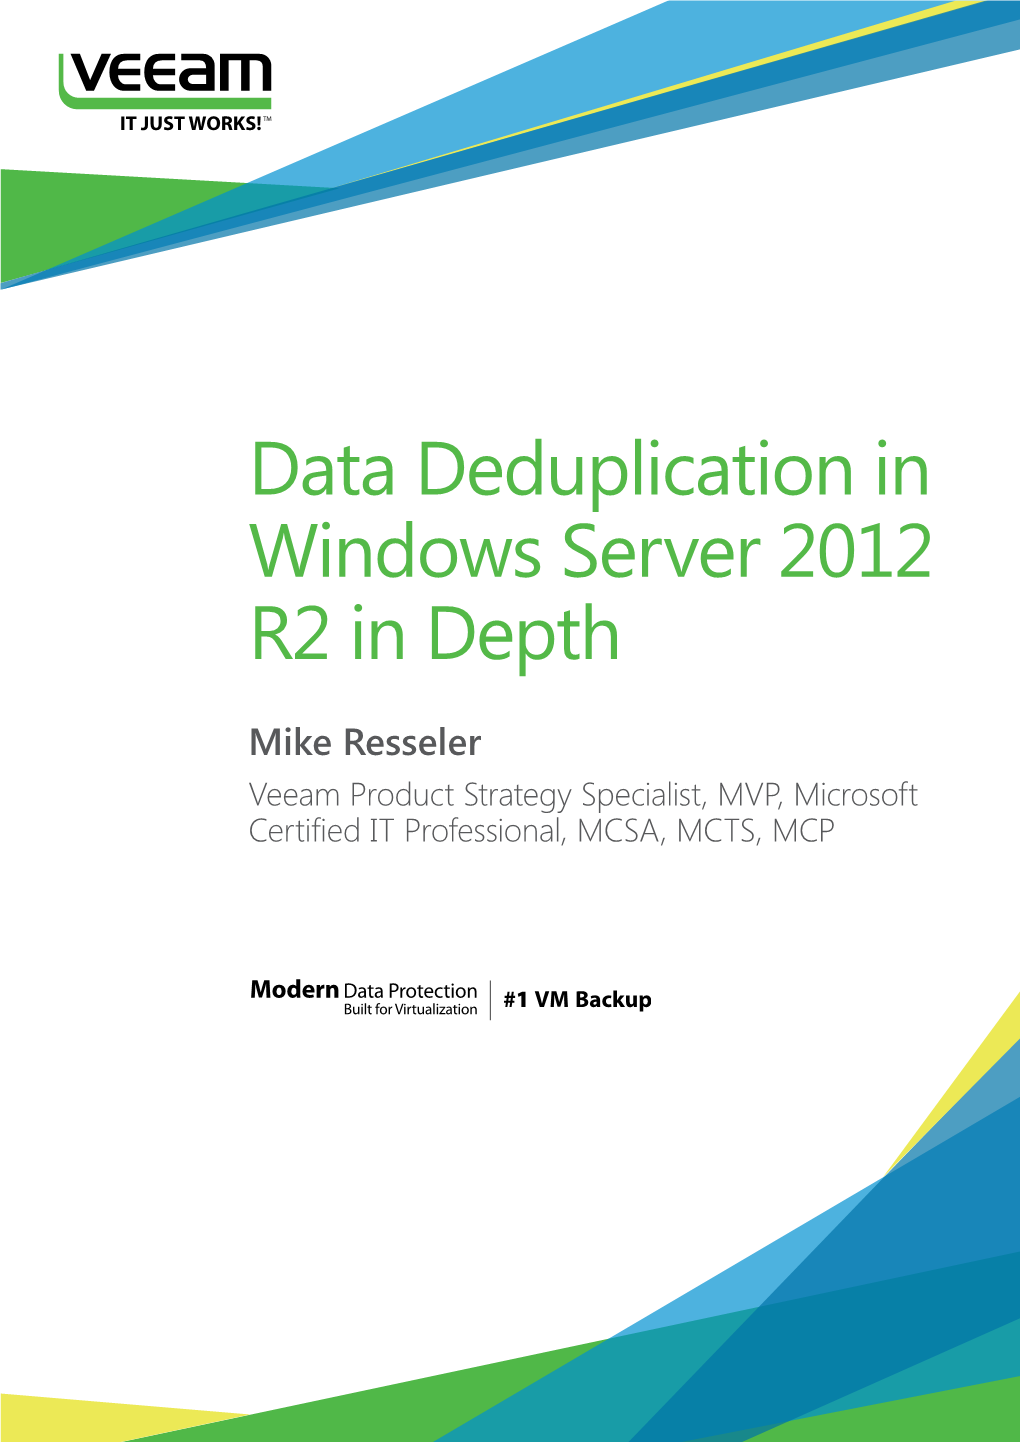 Data Deduplication in Windows Server 2012 R2 in Depth